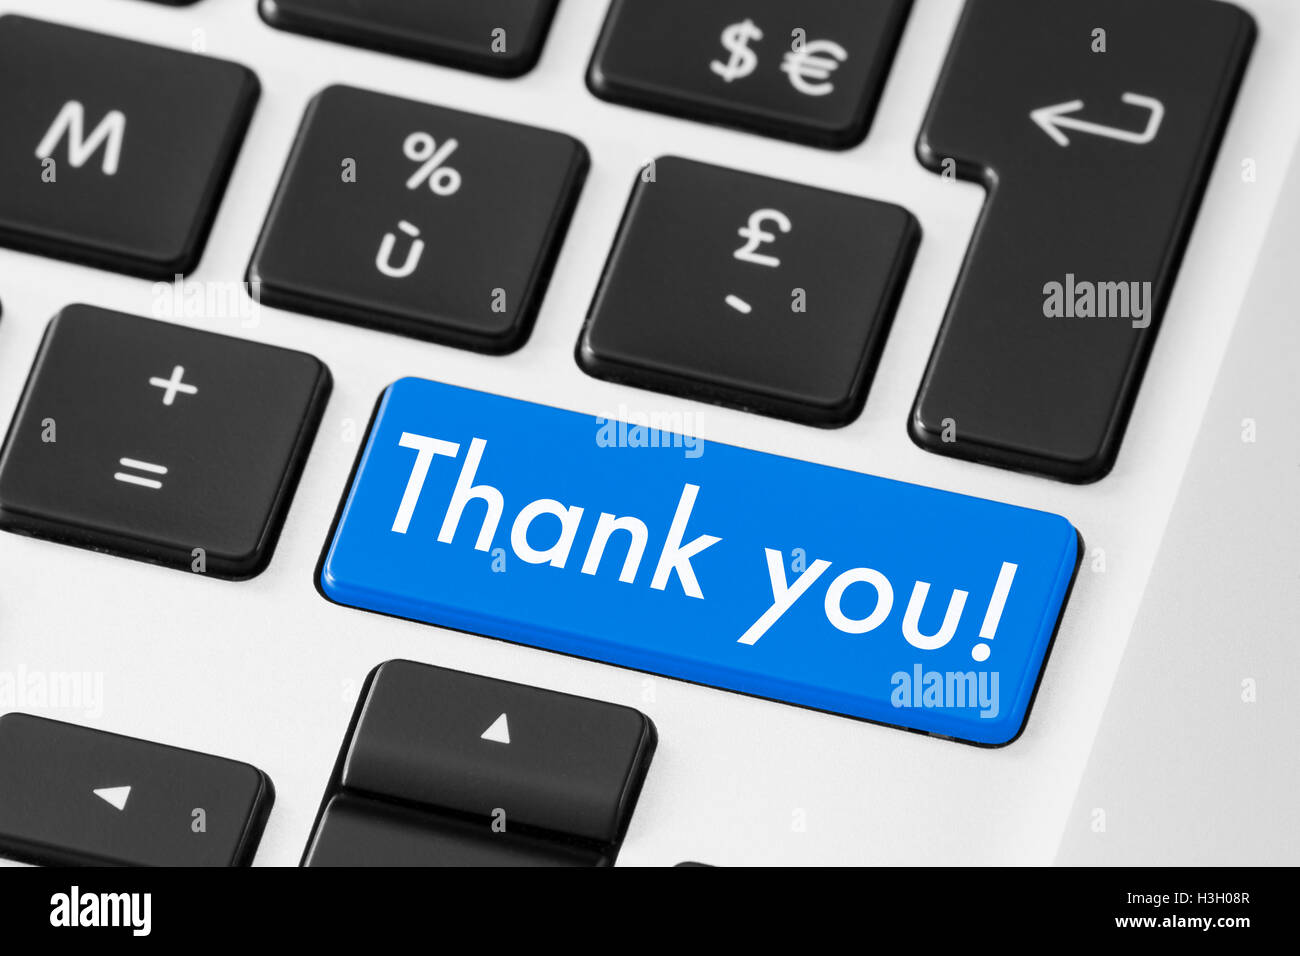 Thank you button keyboard for polite feedback Stock Photo